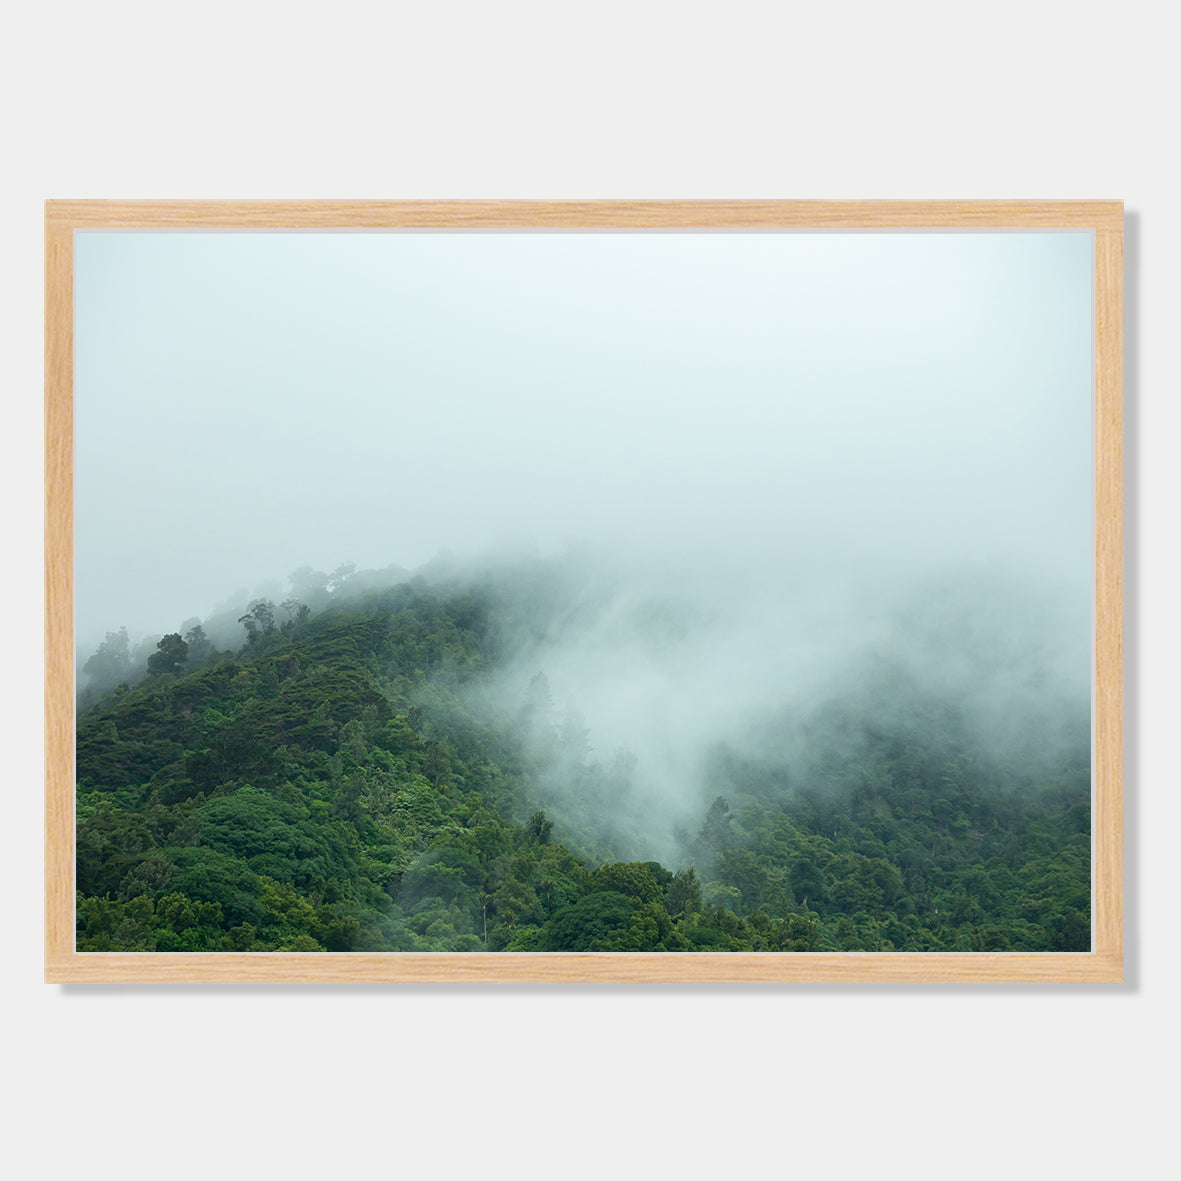 Photographic Art Print of hill side shrouded in mist, Te Aroha, New Zealand by Chris Starkey. Printed in New Zealand by endemicworld and framed in raw oak.